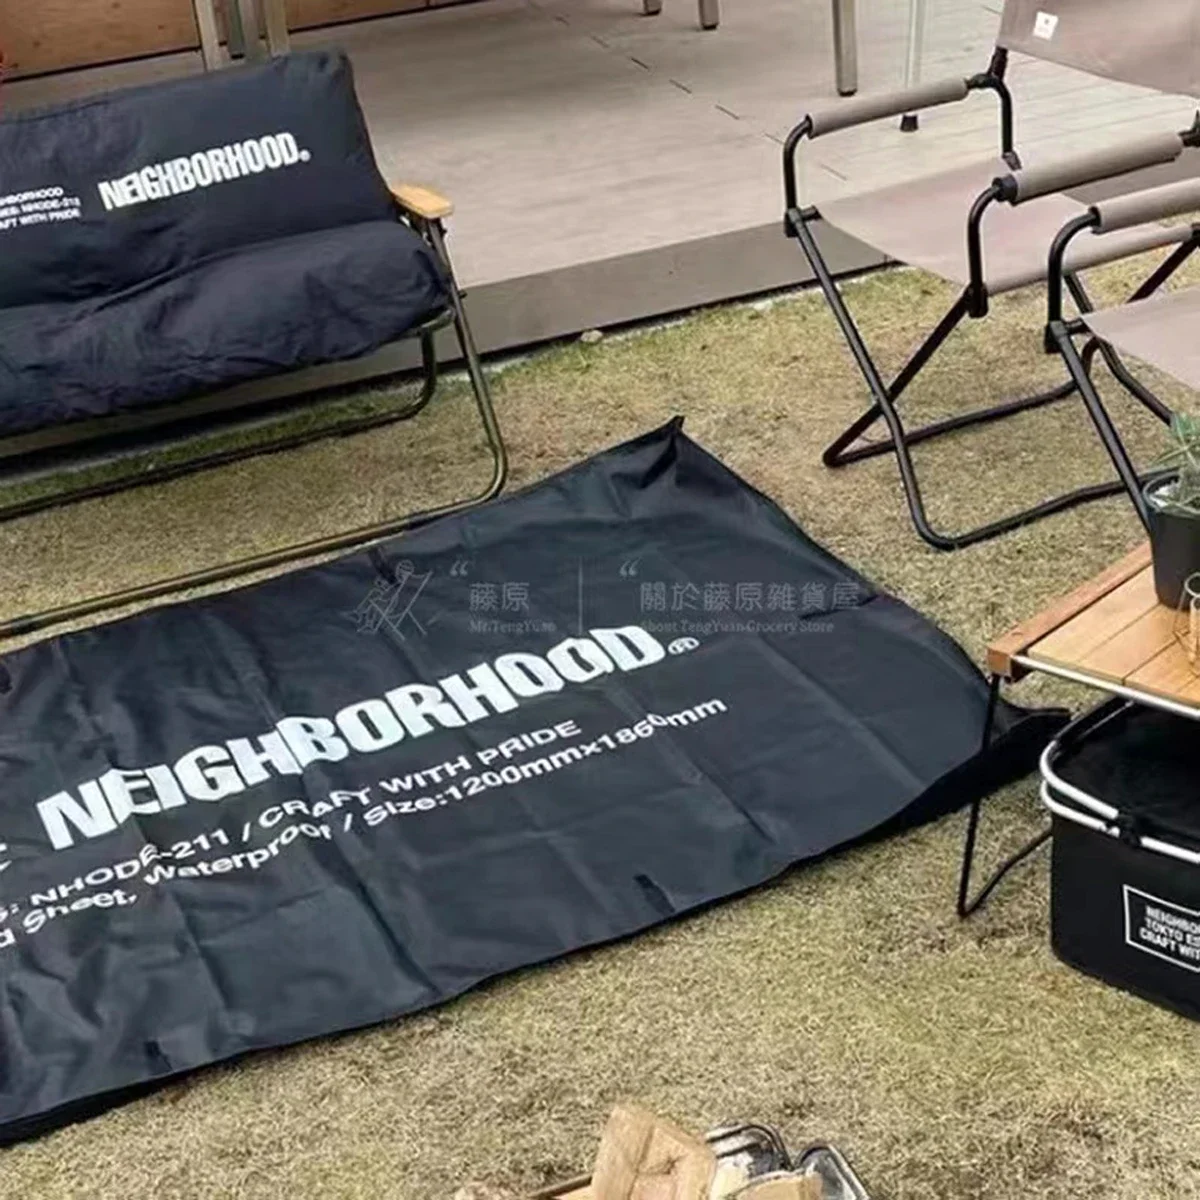 

Newarh1ood-estera de picnic de PVC impermeable, hebilla de almacenamiento portátil para acampar al aire libre, a prueba de humed